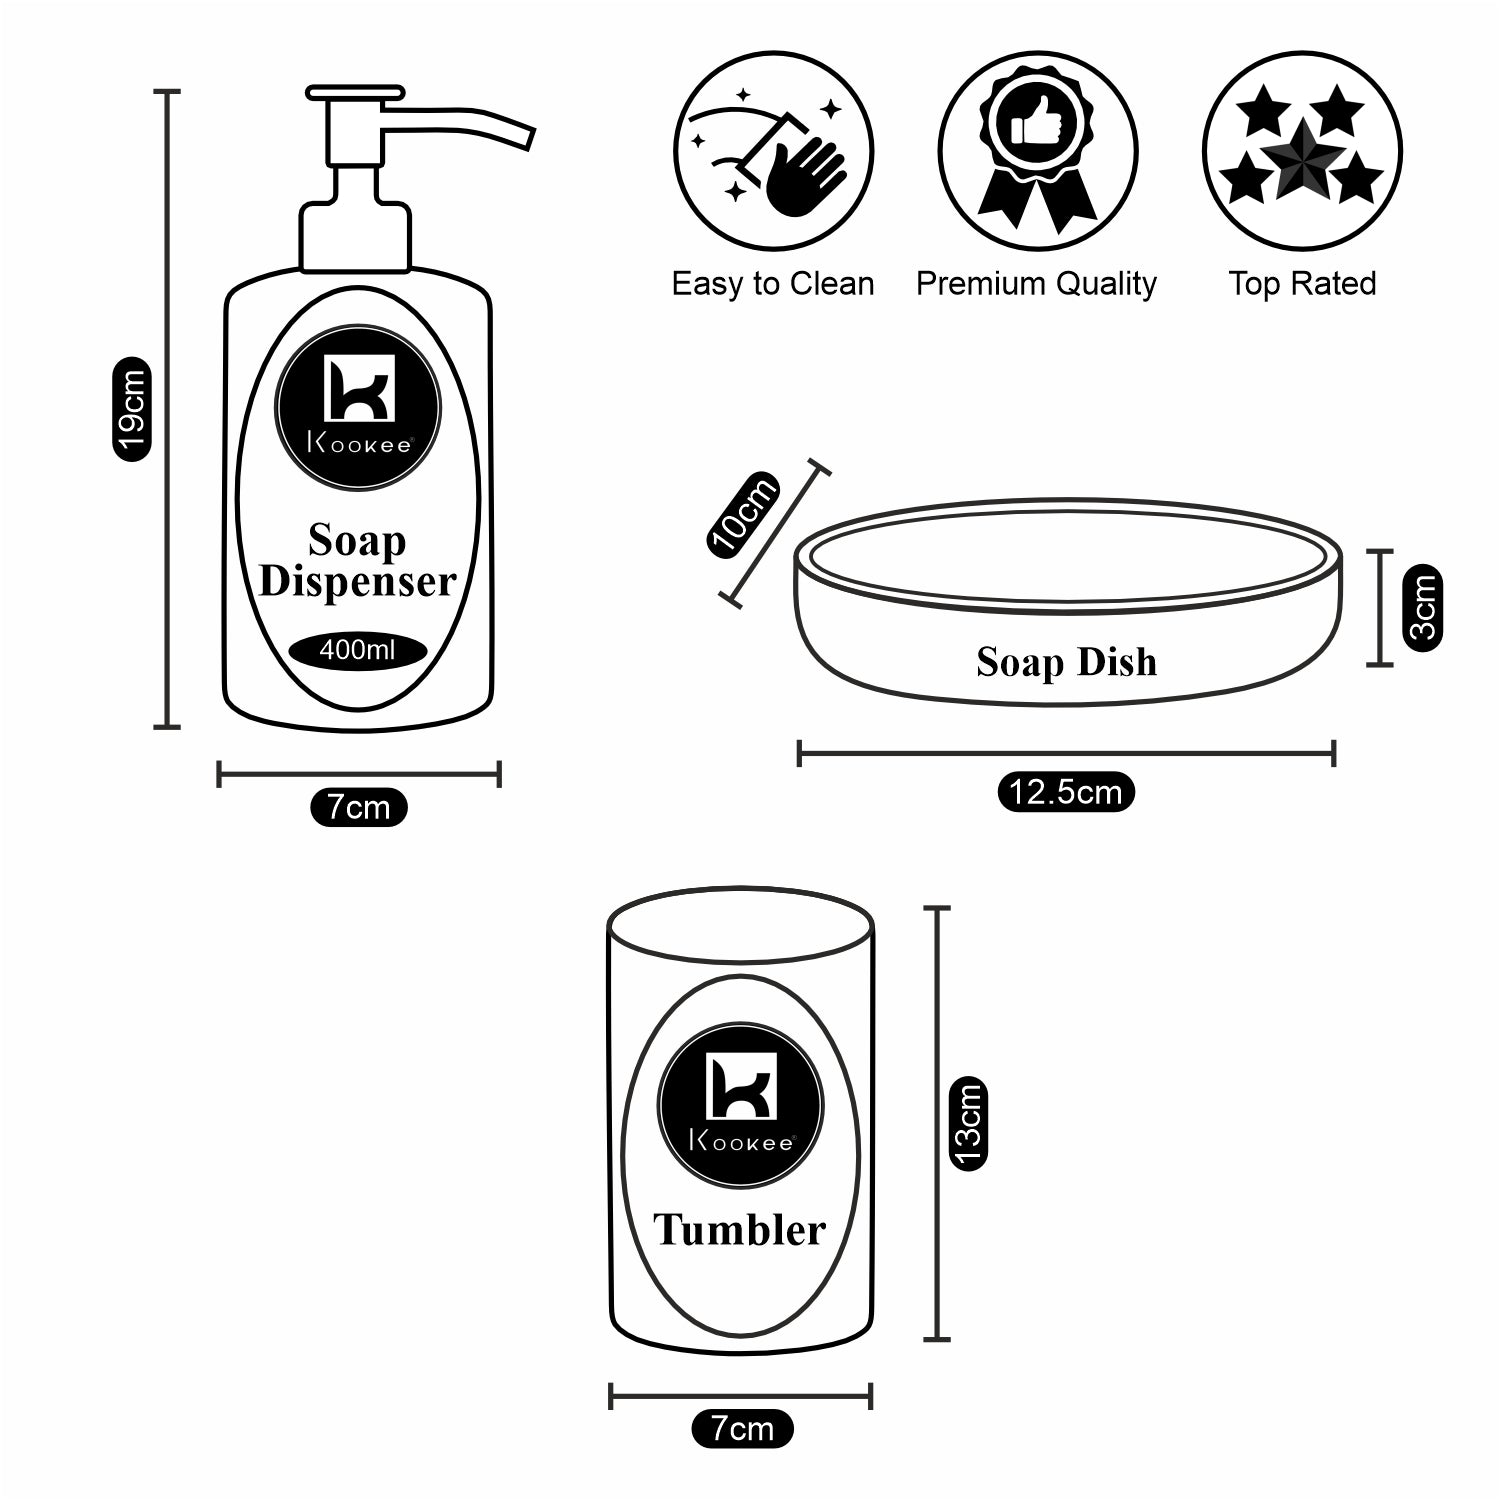 Ceramic Bathroom Accessories Set of 3 Bath Set with Soap Dispenser (9729)